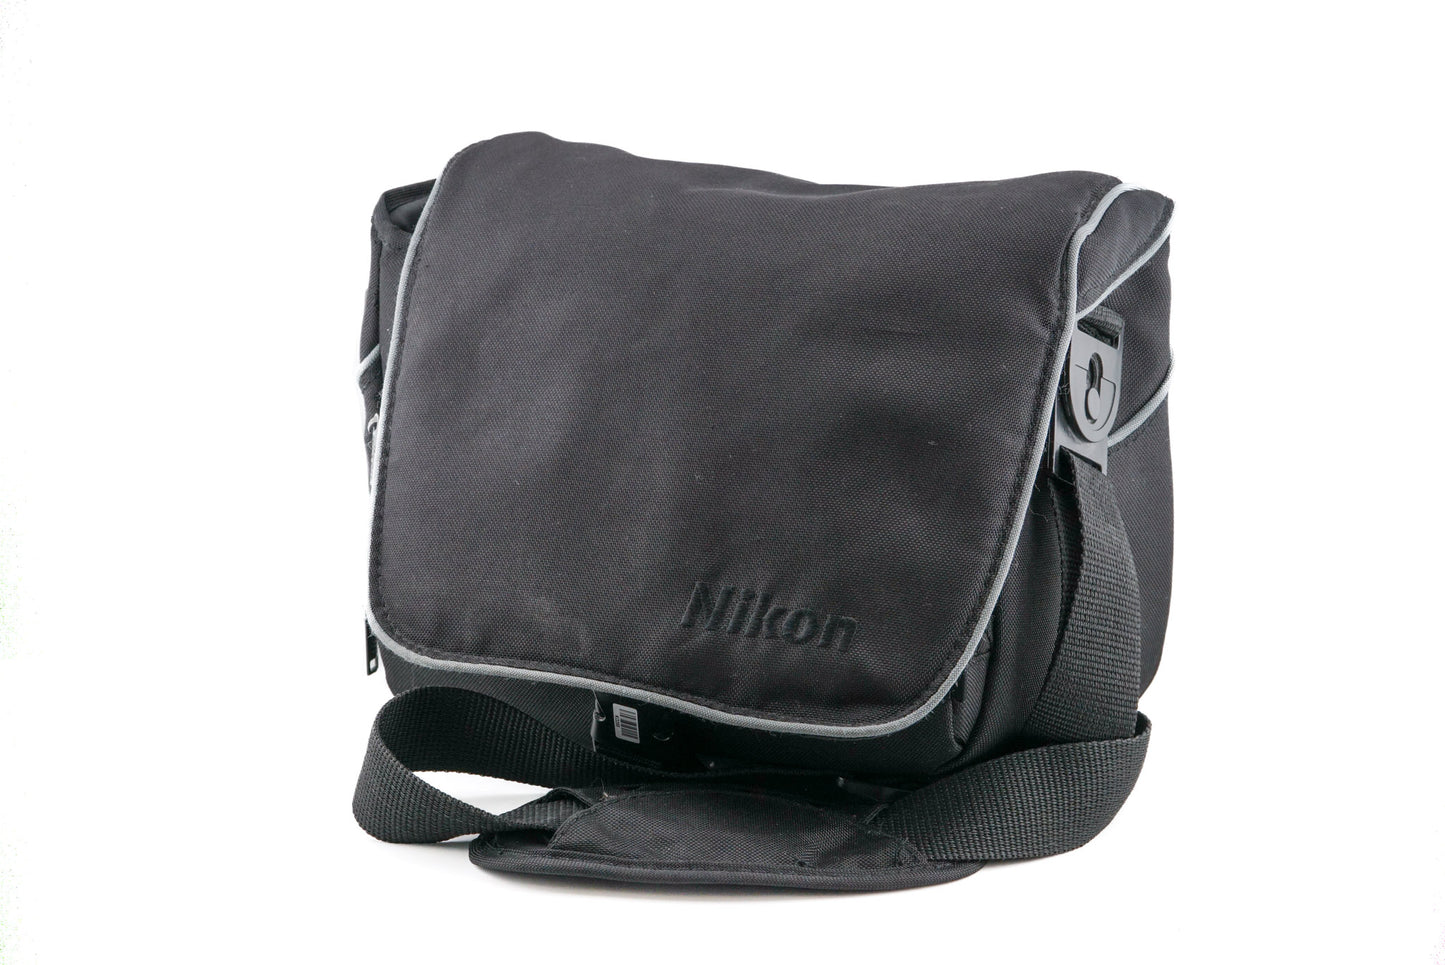 Nikon Camera Bag - Accessory